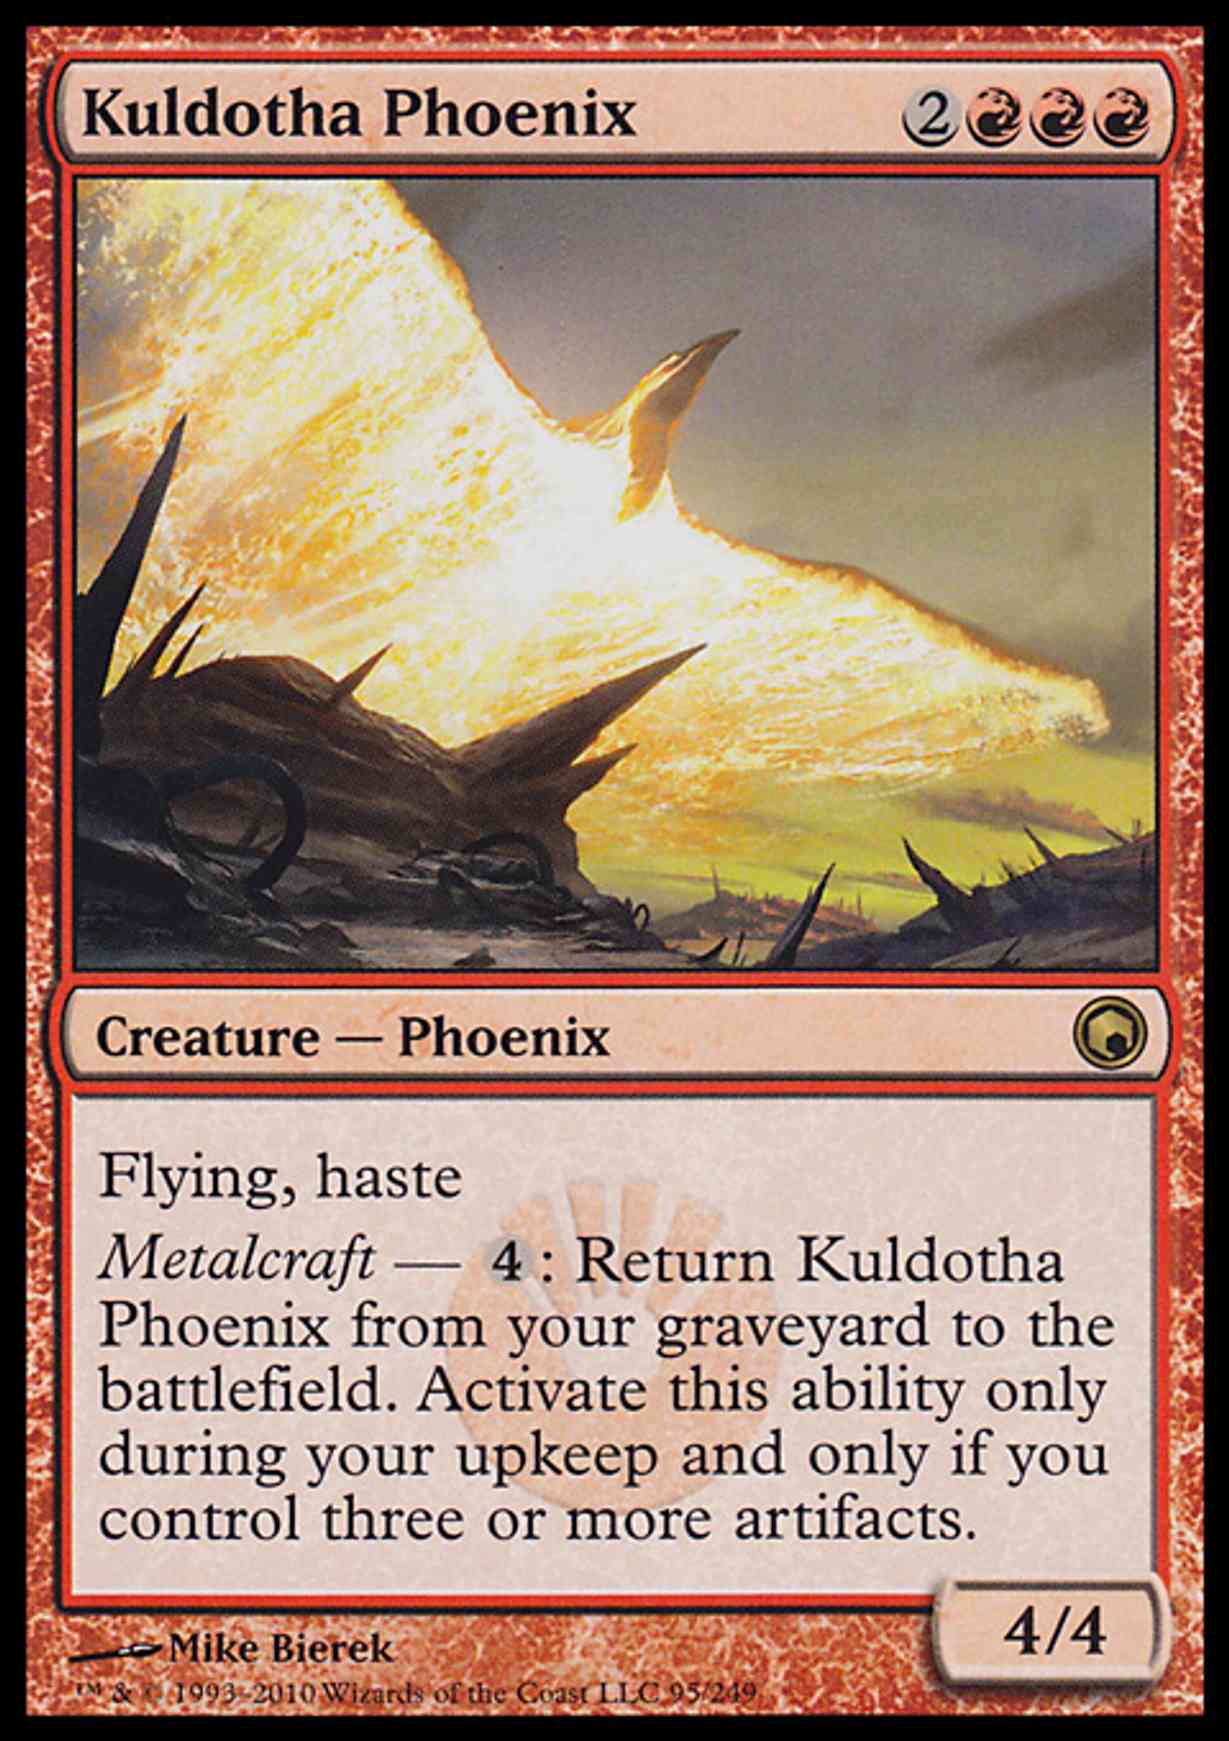 Kuldotha Phoenix magic card front